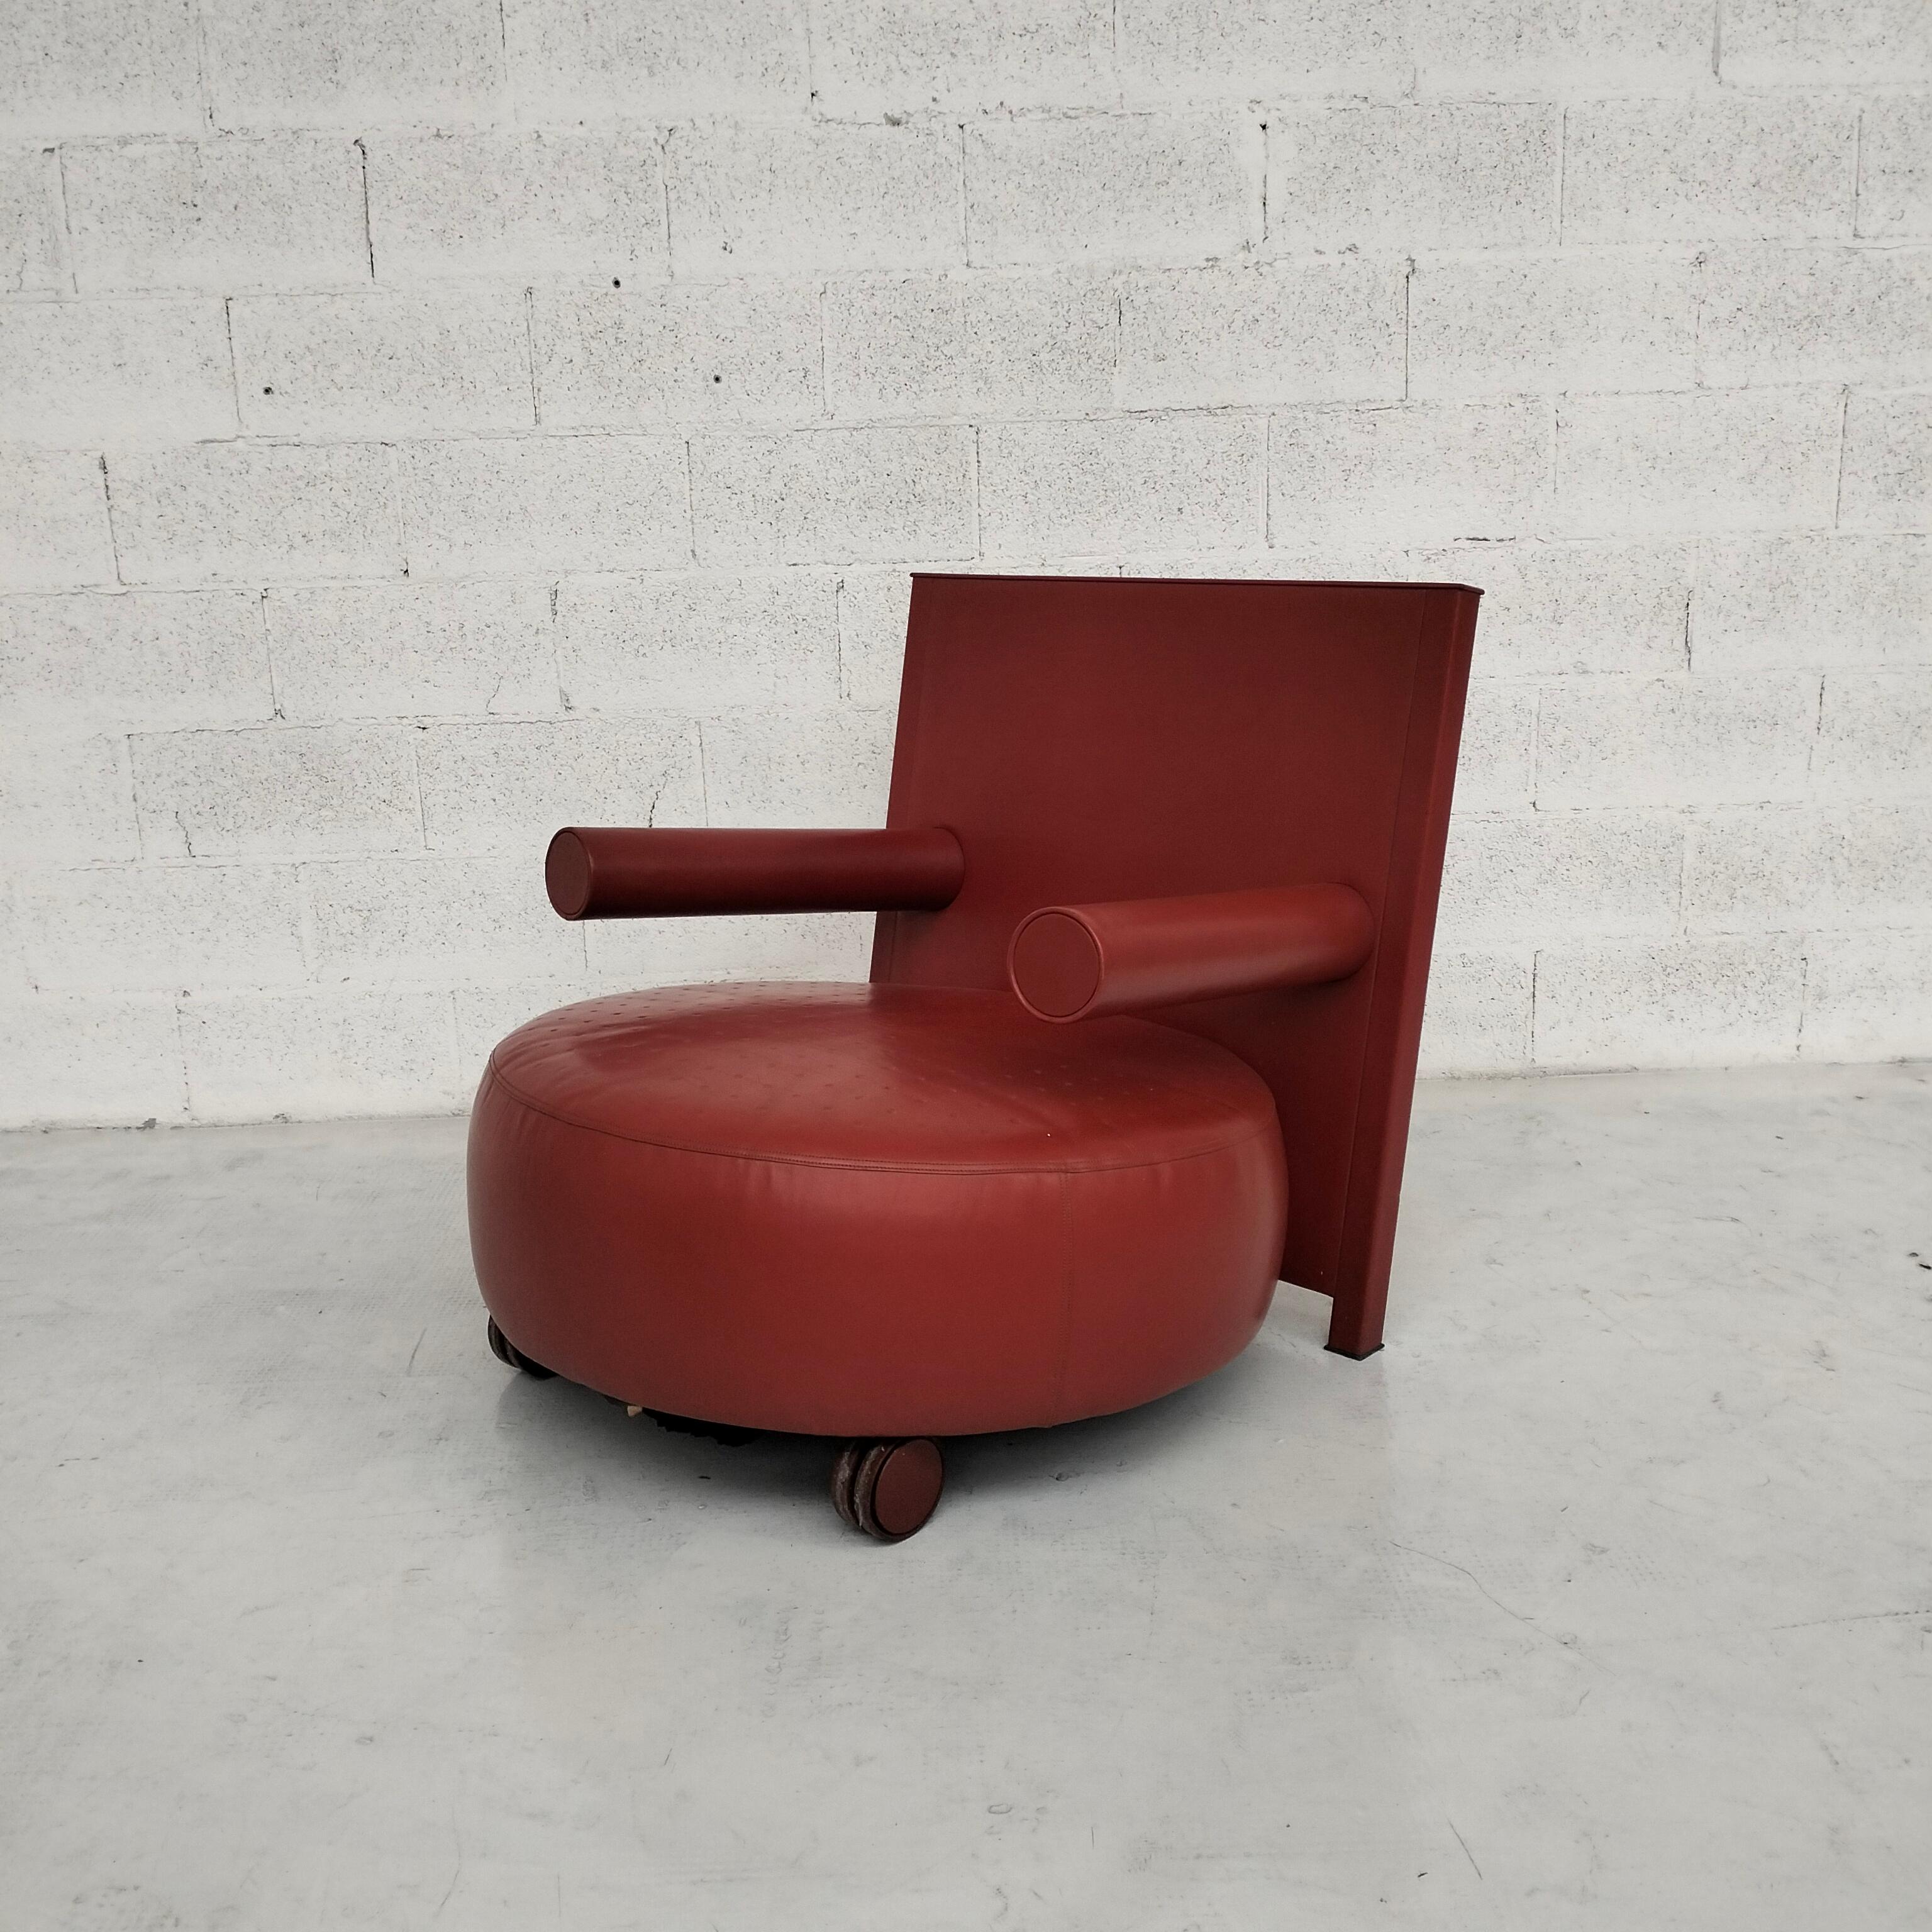 Mid-Century Modern Baisity leather armchair by Antonio Citterio for B&B Italia - 1980’s For Sale